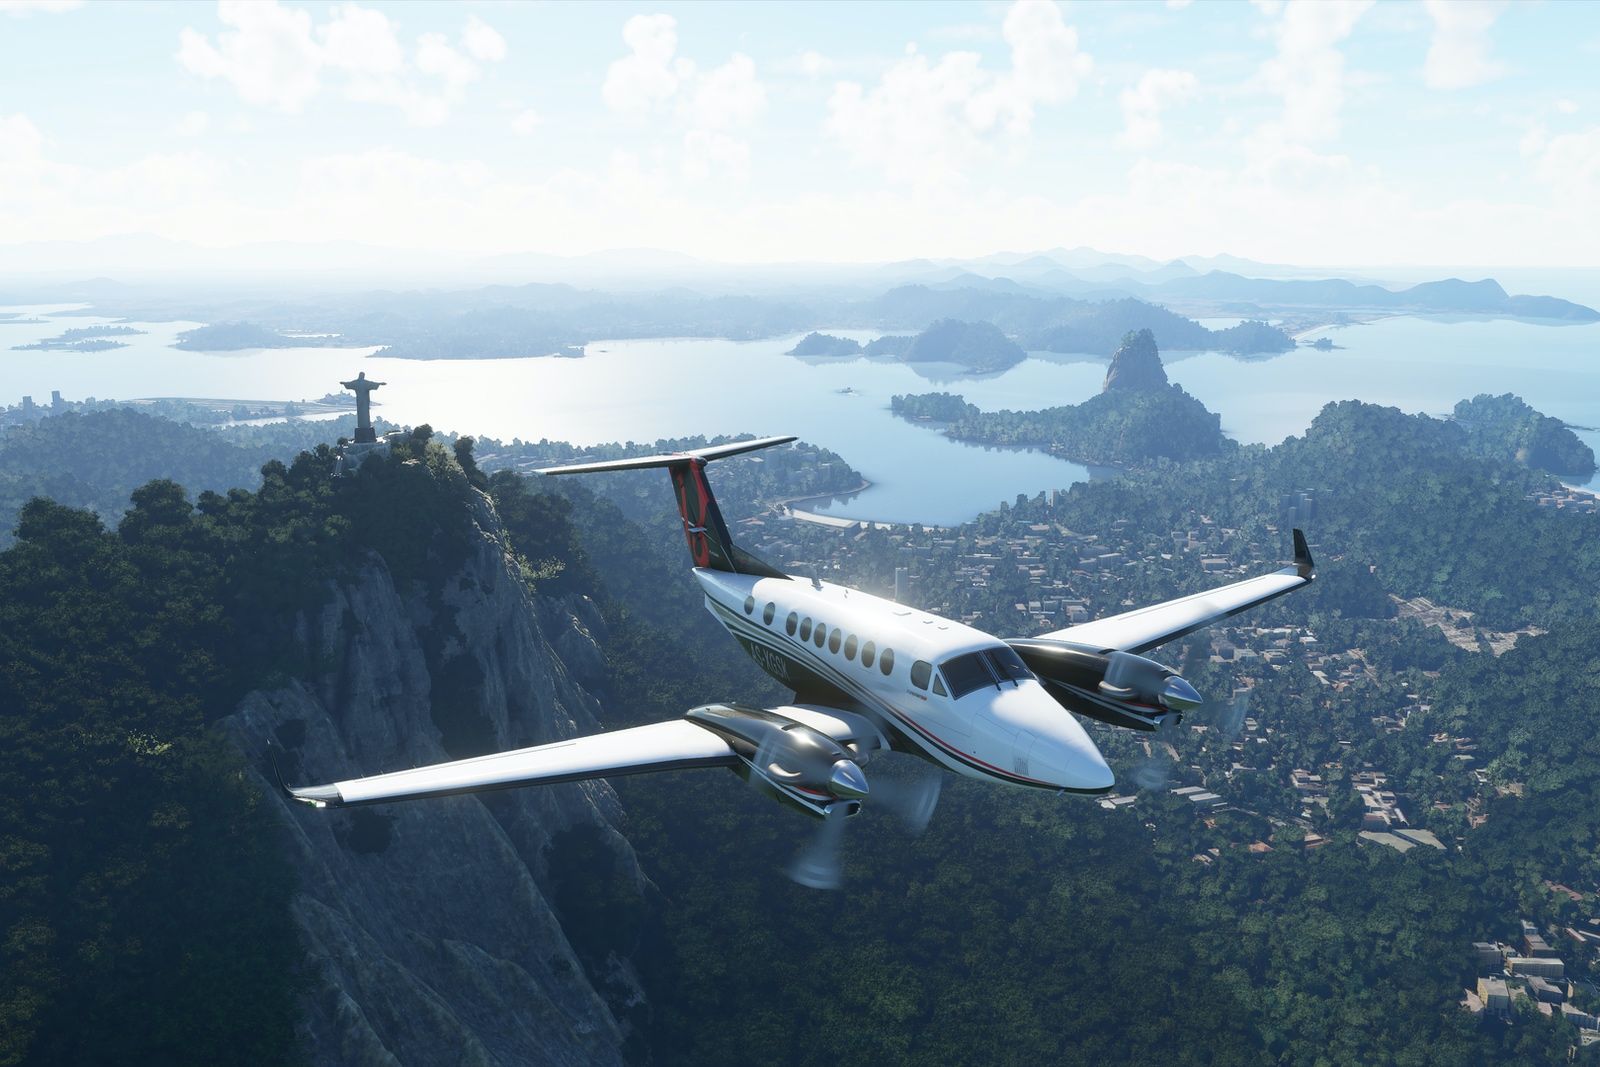 MS Flight Sim coming to Xbox Series X 15 June, leak shows photo 1